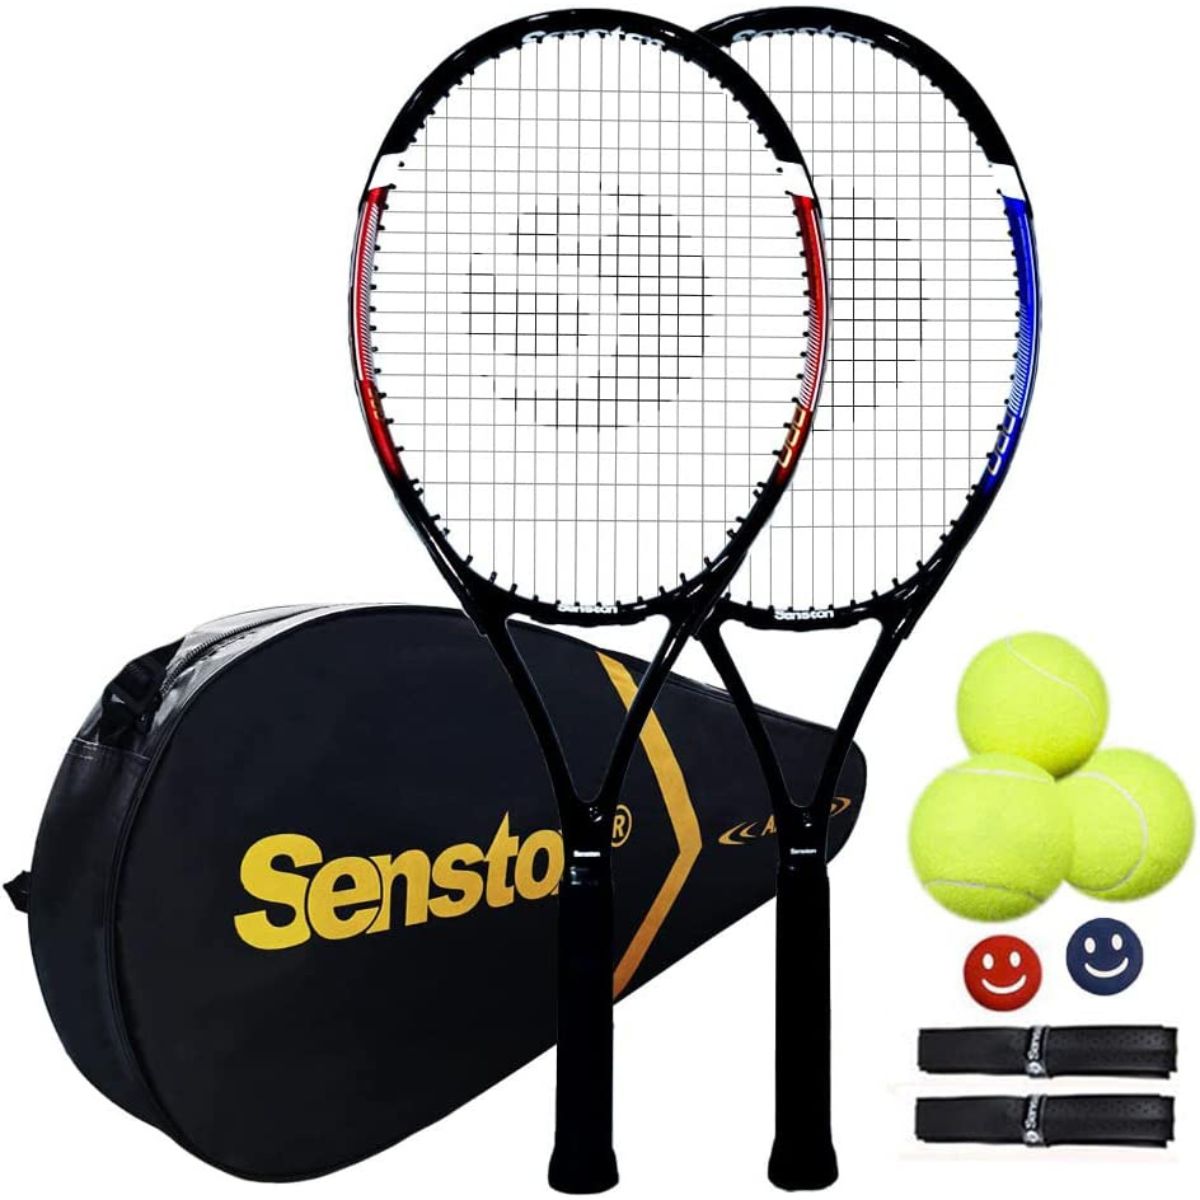 The Best Tennis Rackets Under $50 Option: Senston Tennis Rackets